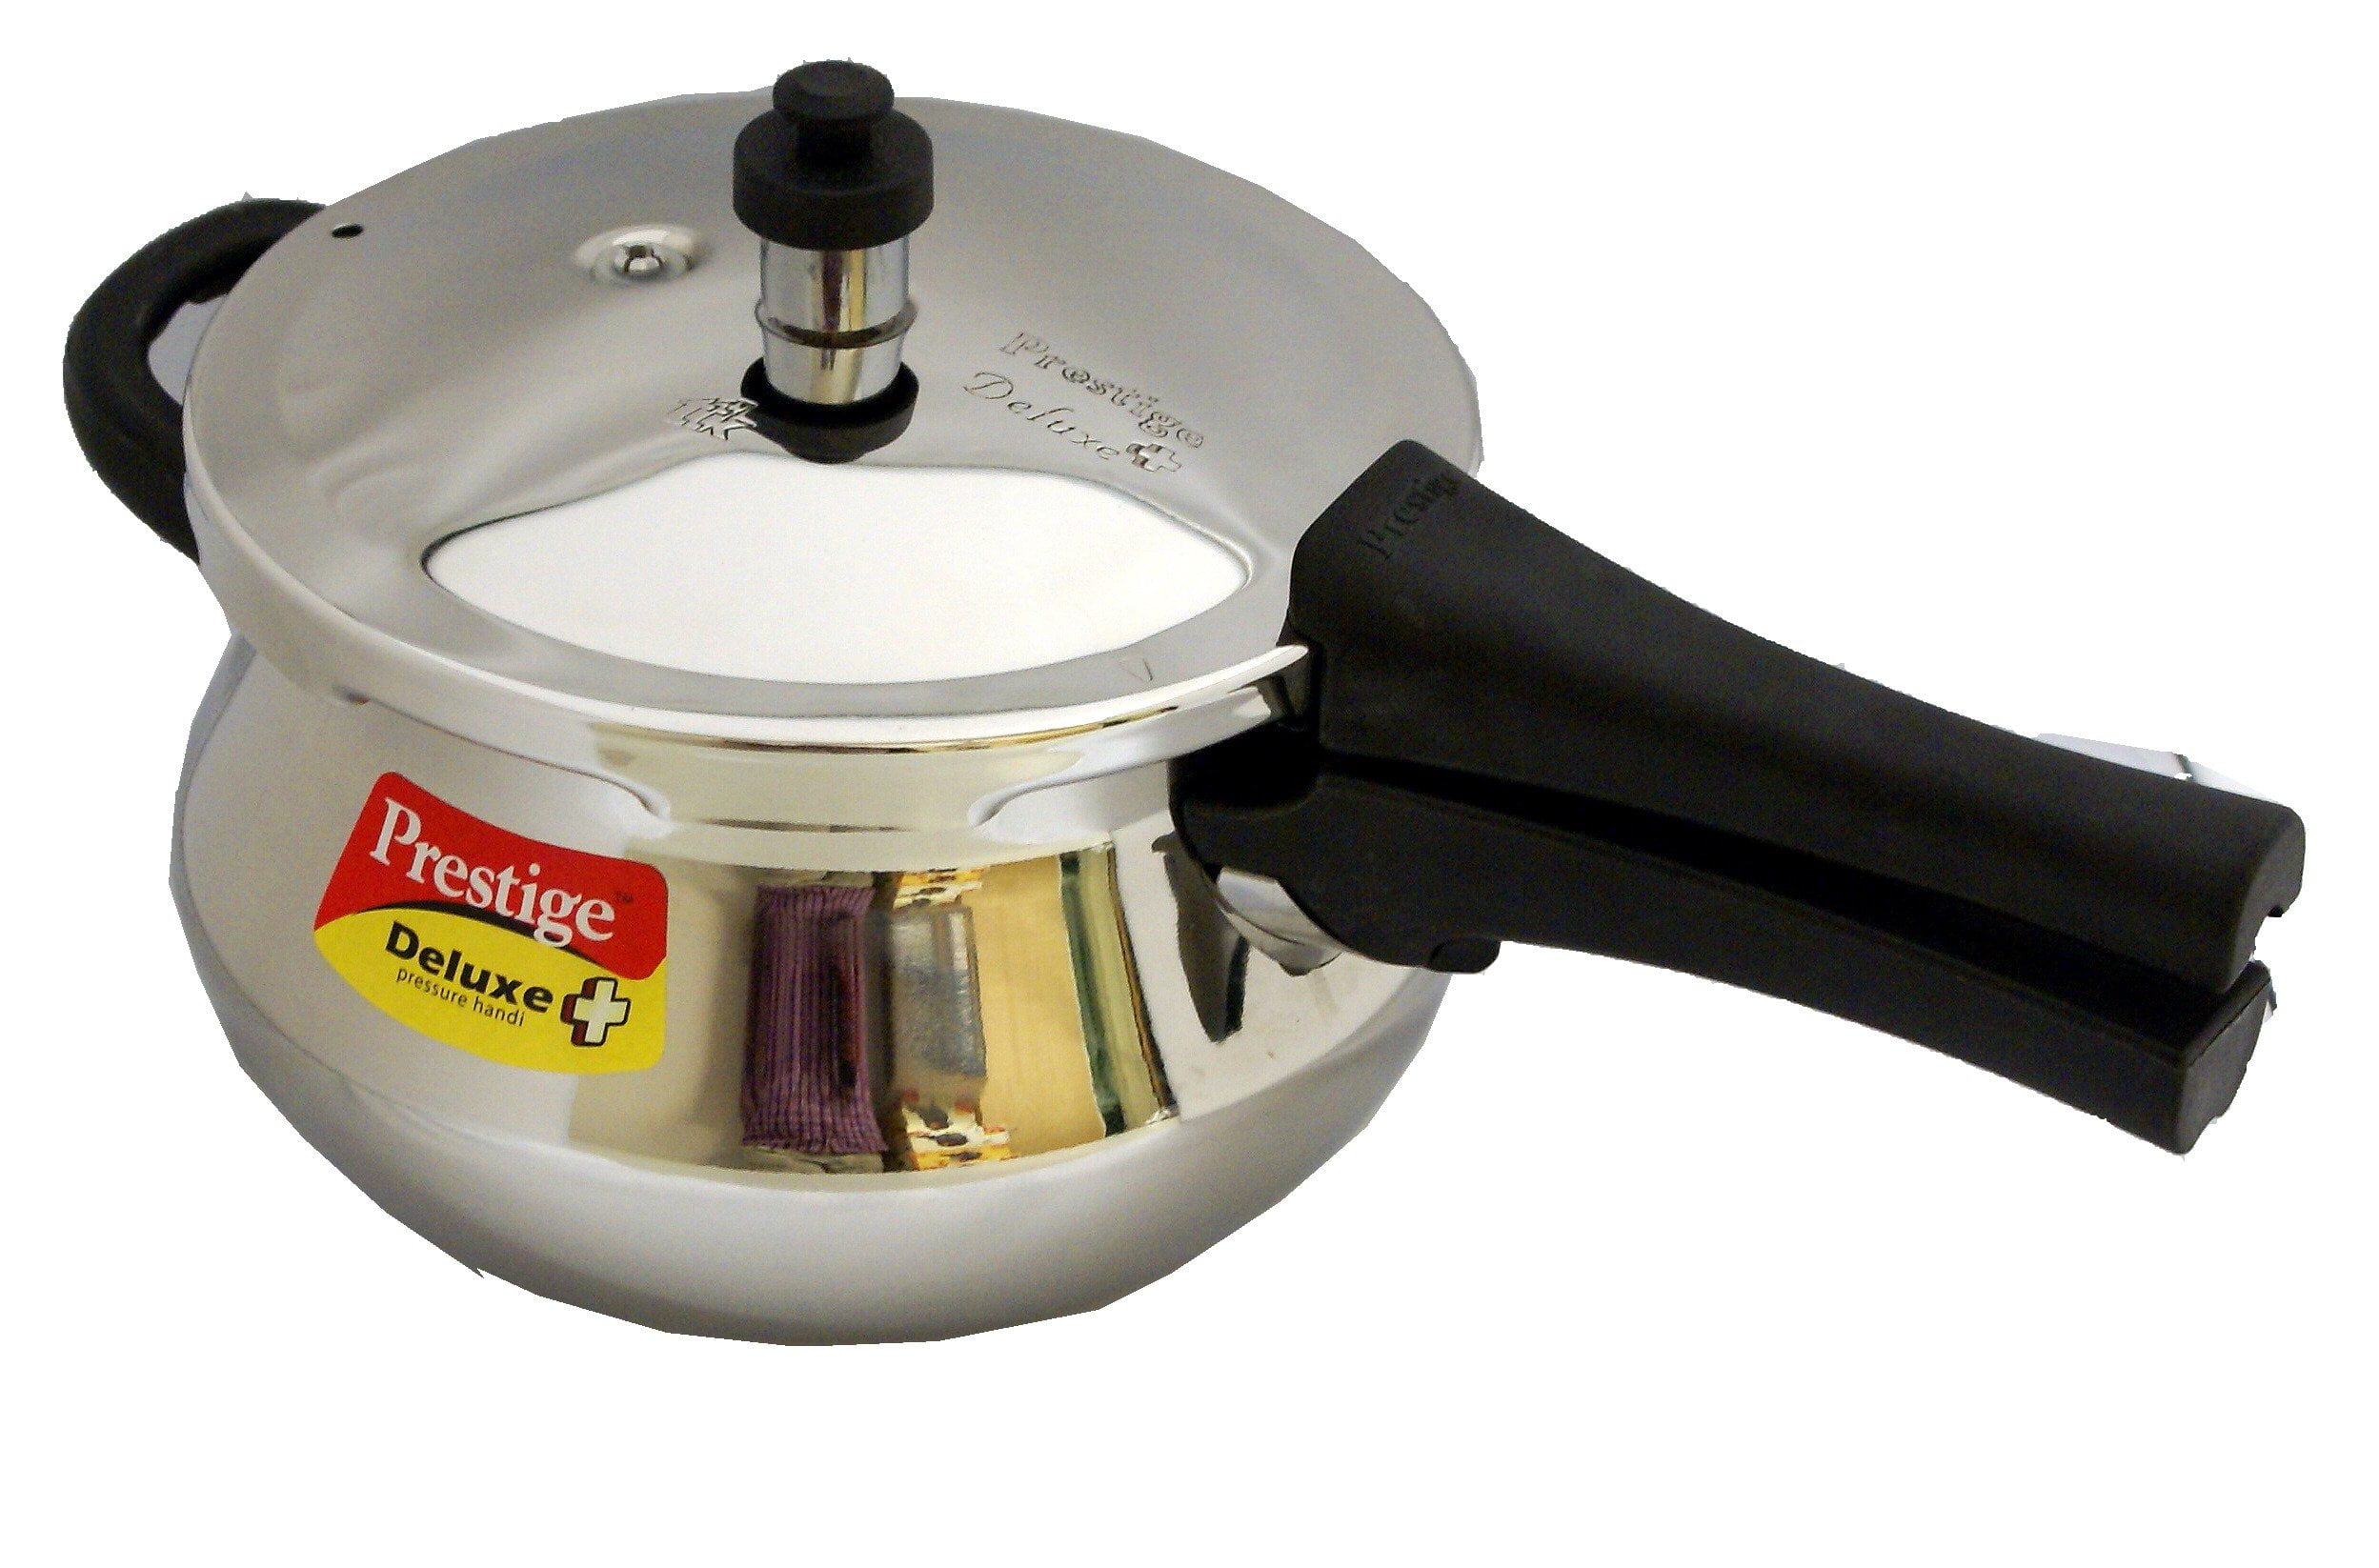 Prestige Deluxe Stainless Steel Mini Handi Pressure Cooker, 3.3-Liter Prestige Stainless Steel Pressure Cooker